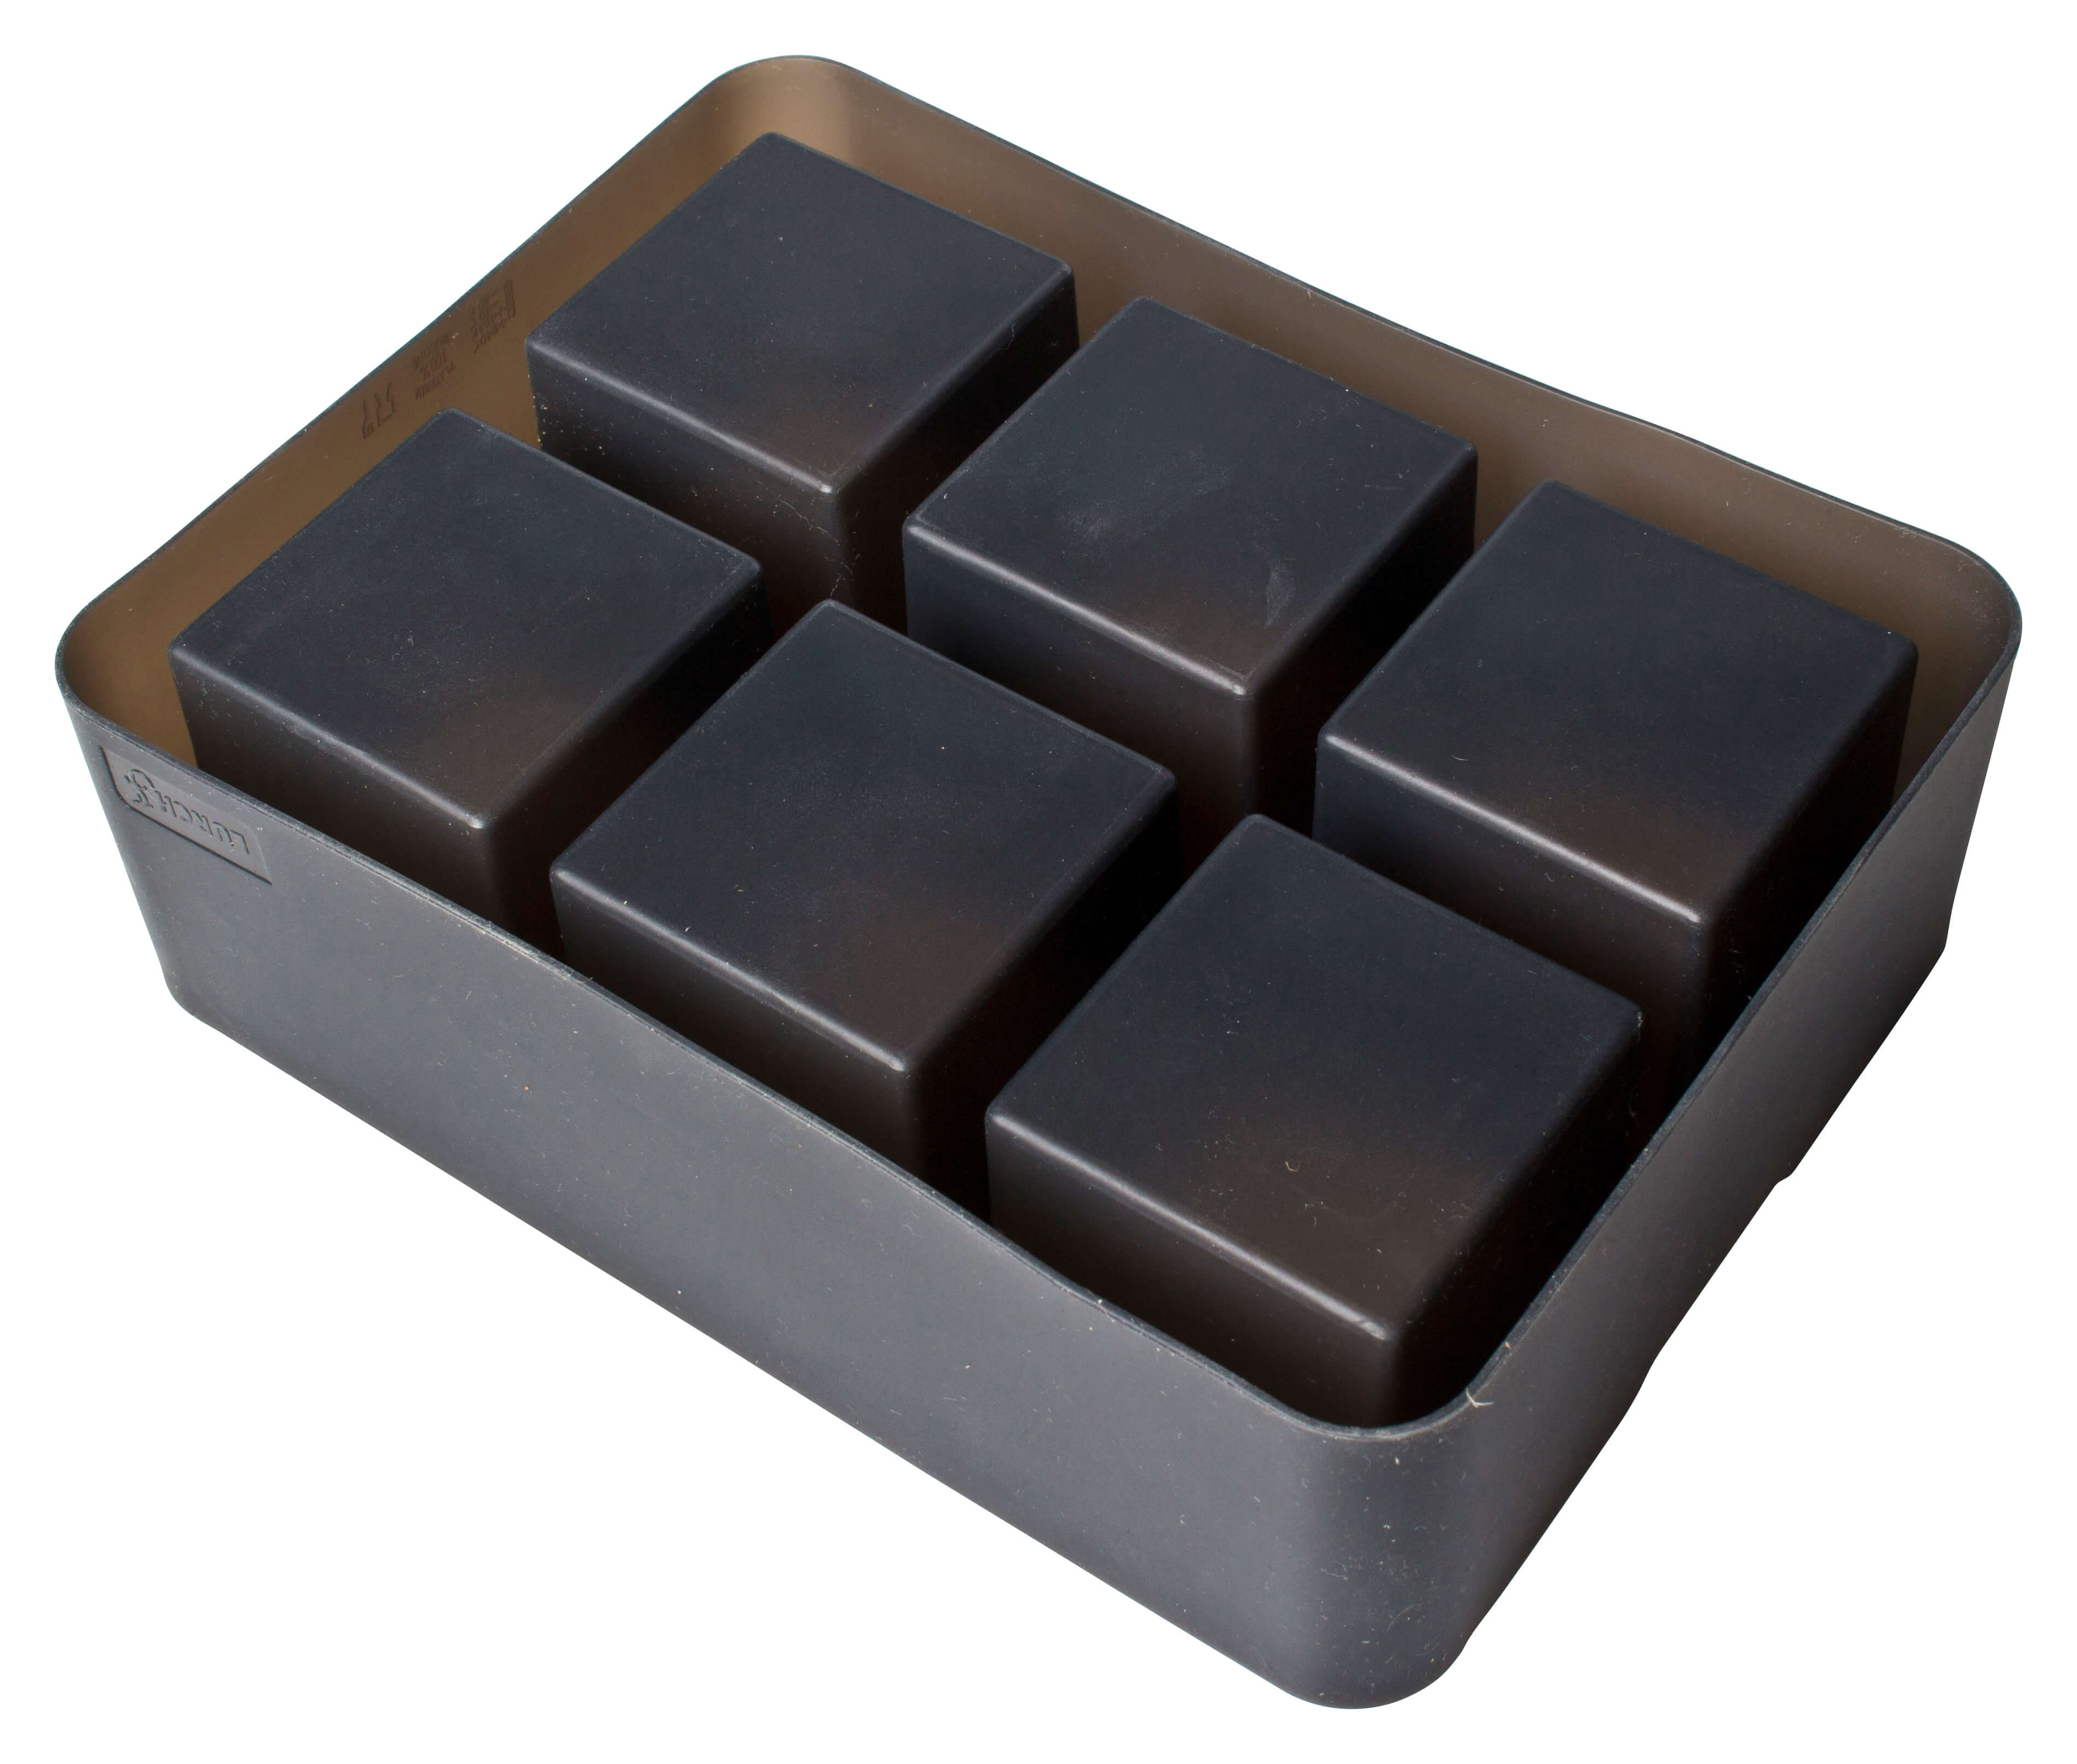 Ice former Cubes, platinum silicone, Lurch - 5cm